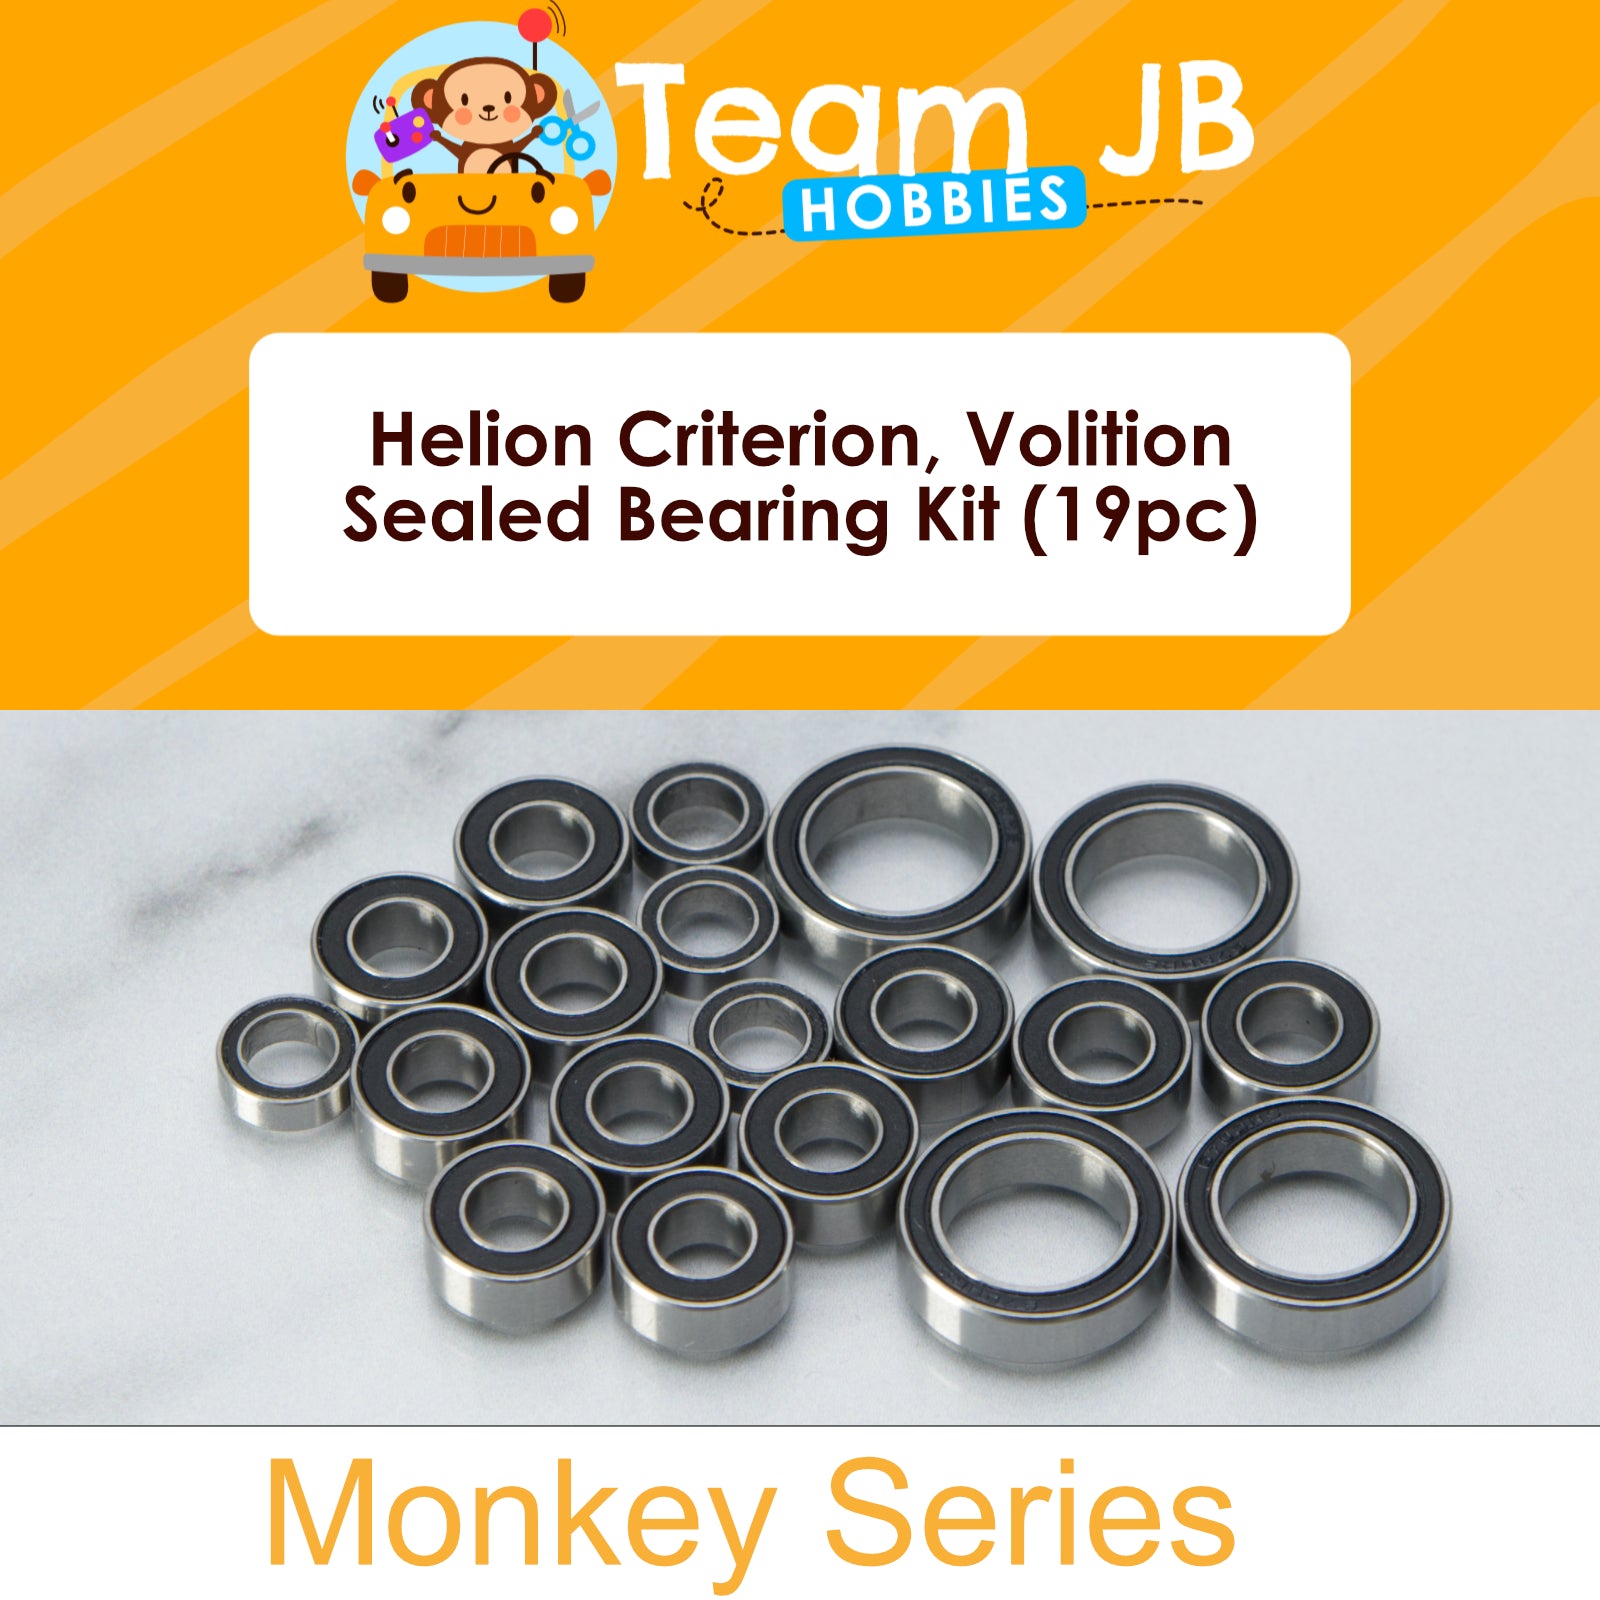 Helion Criterion, Volition - Sealed Bearing Kit